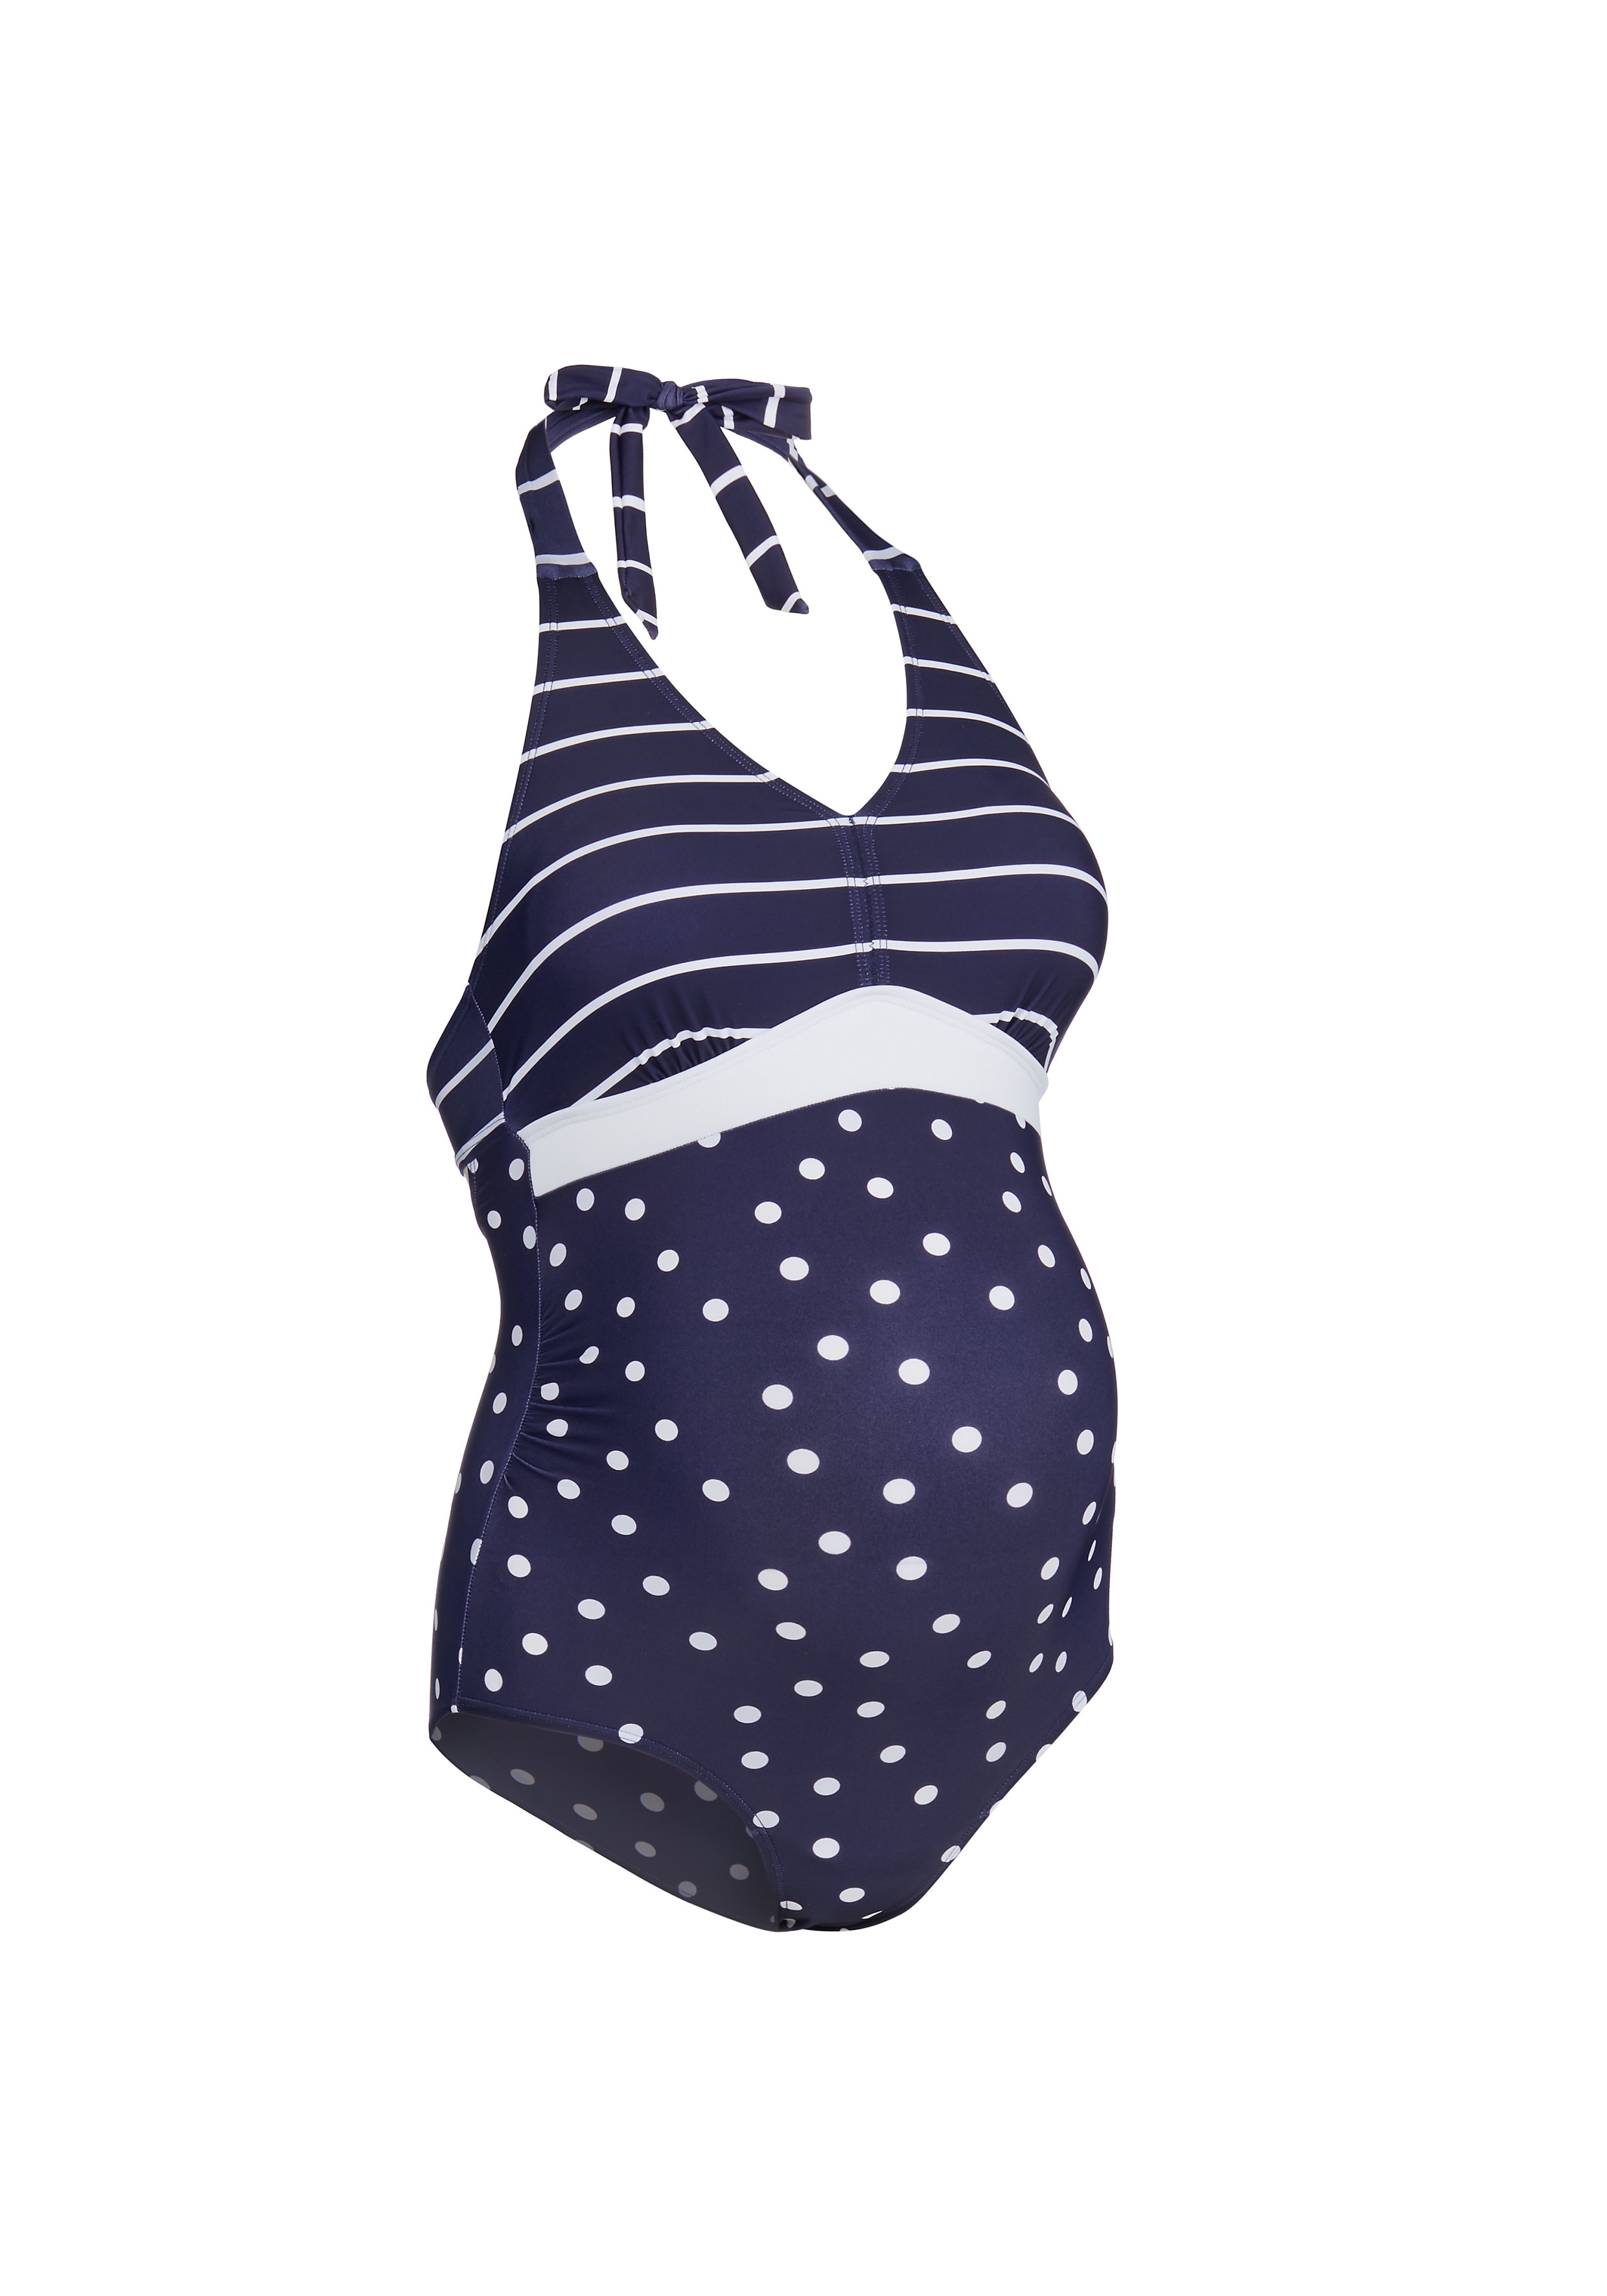 Women Maternity Sleeveless Swimsuit Striped And Polka Dot Print - Navy